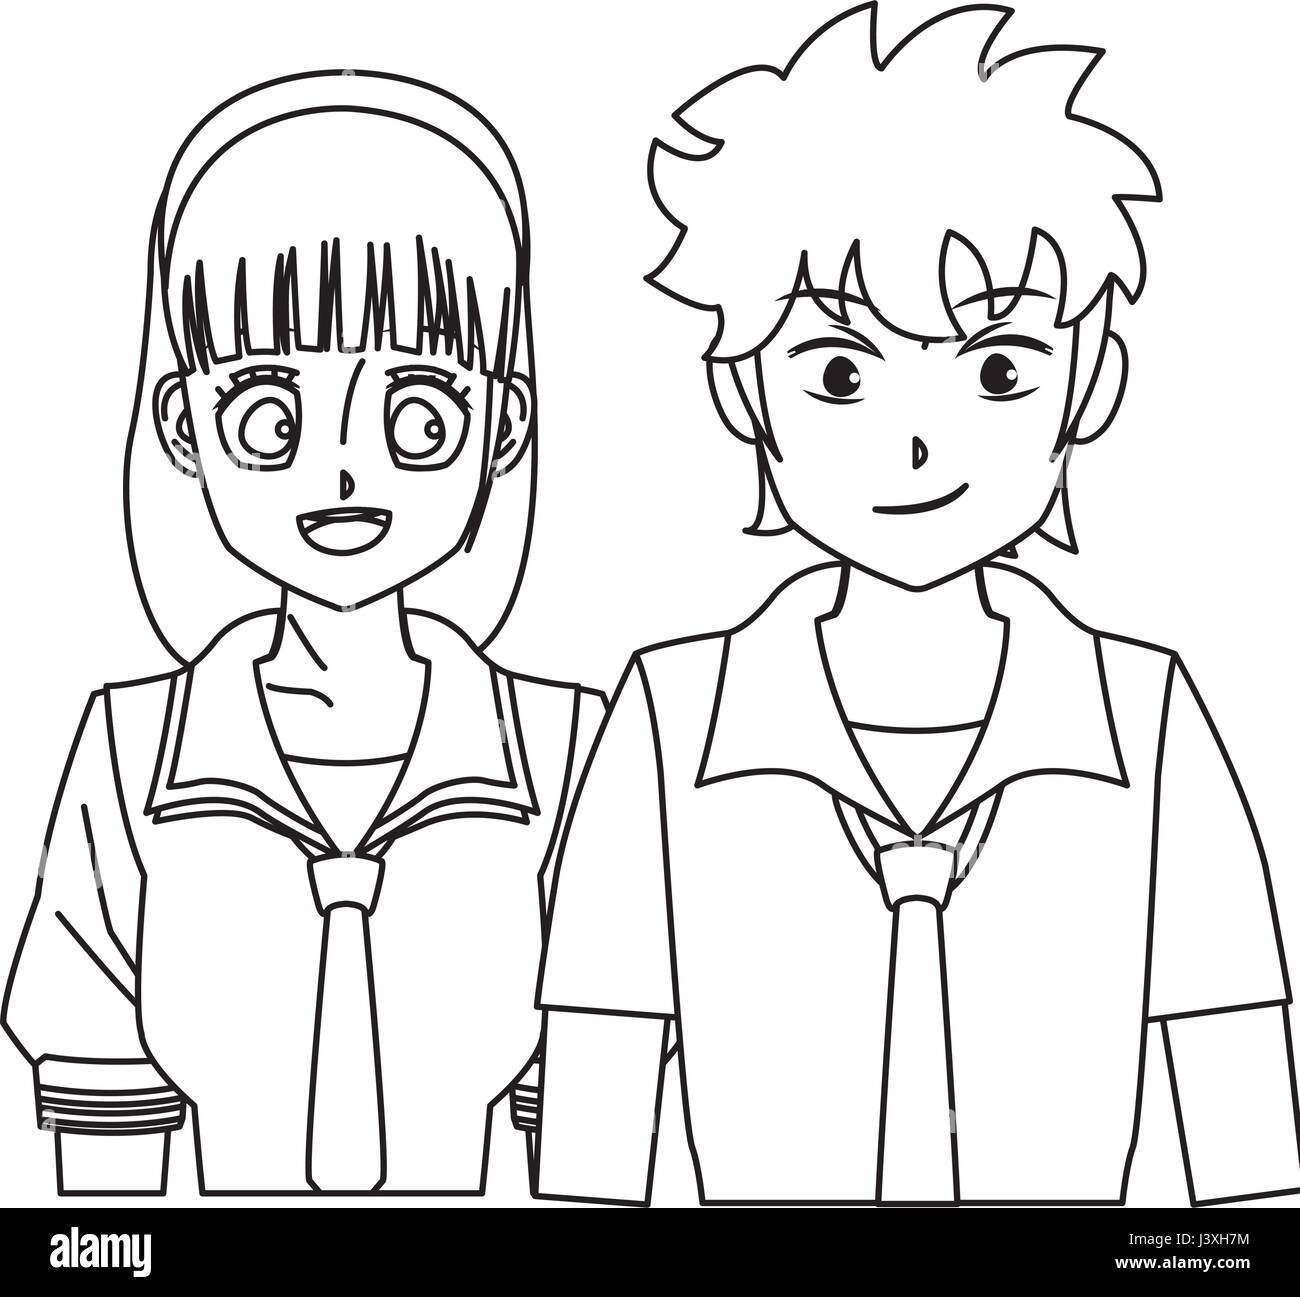 Students Girl And Boy Anime Cartoon Outline Stock Vector Image Art Alamy